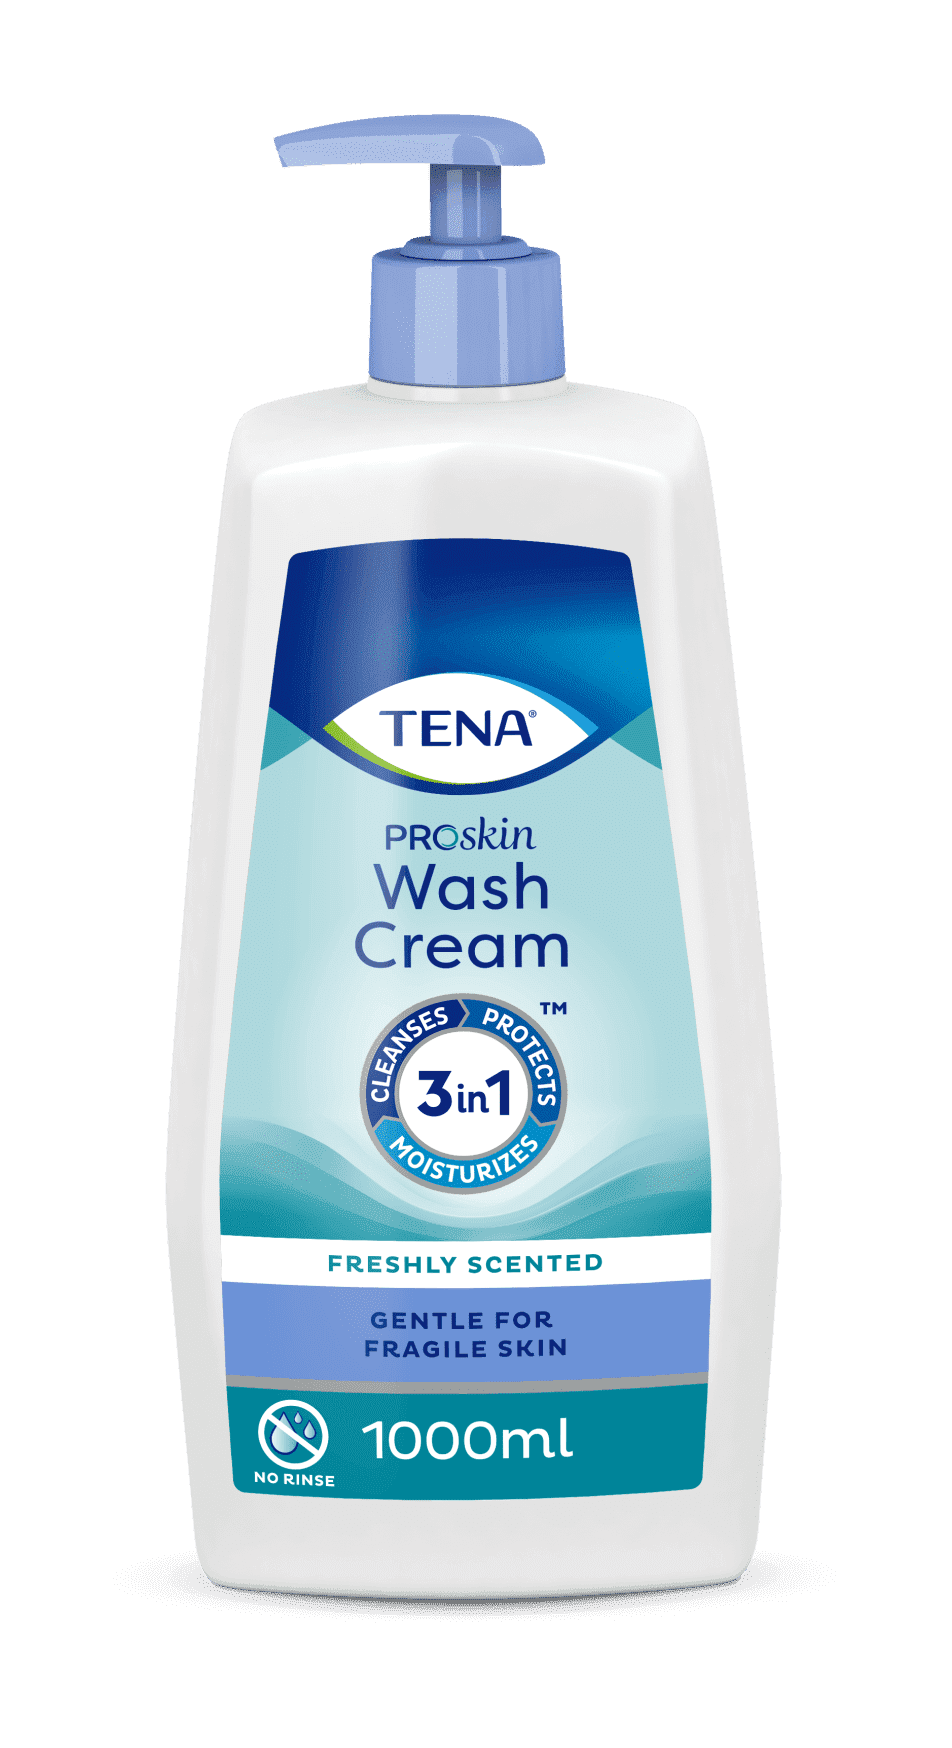 Tena Wash Cream. Wash Cream 3-in-1. Сени крем моющий. Tena 3 в 1 моющий крем confer.